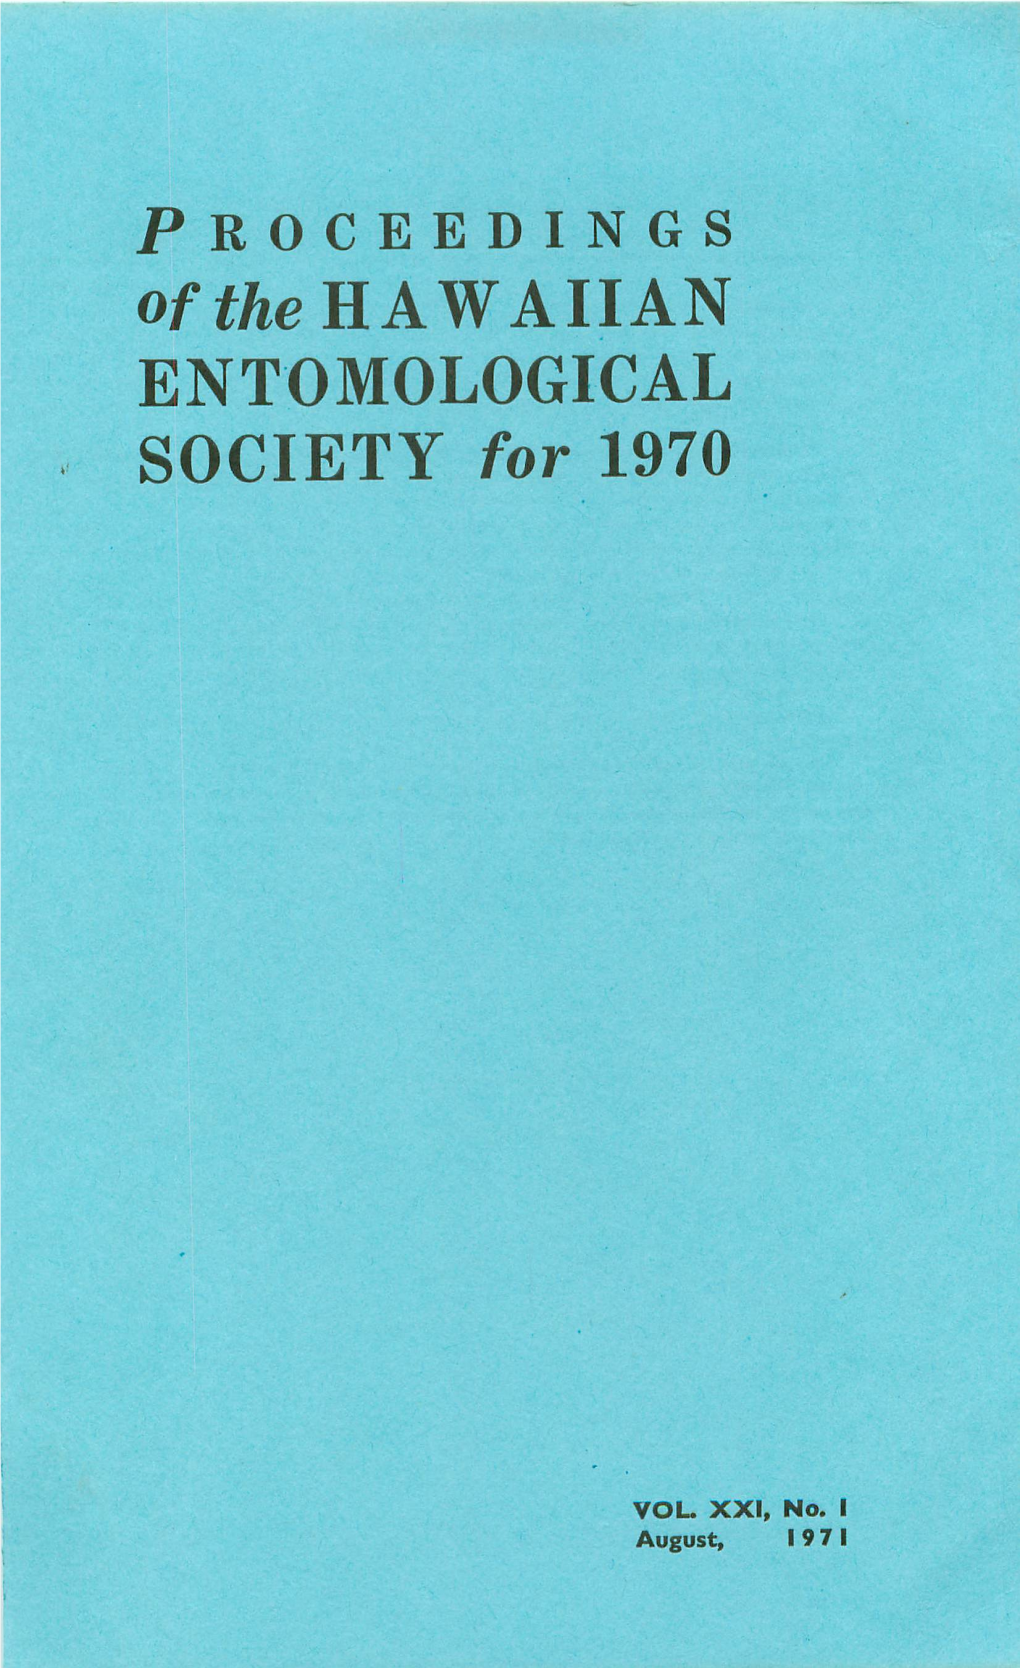 Of the HAWAIIAN ENTOMOLOGICAL SOCIETY for 1970